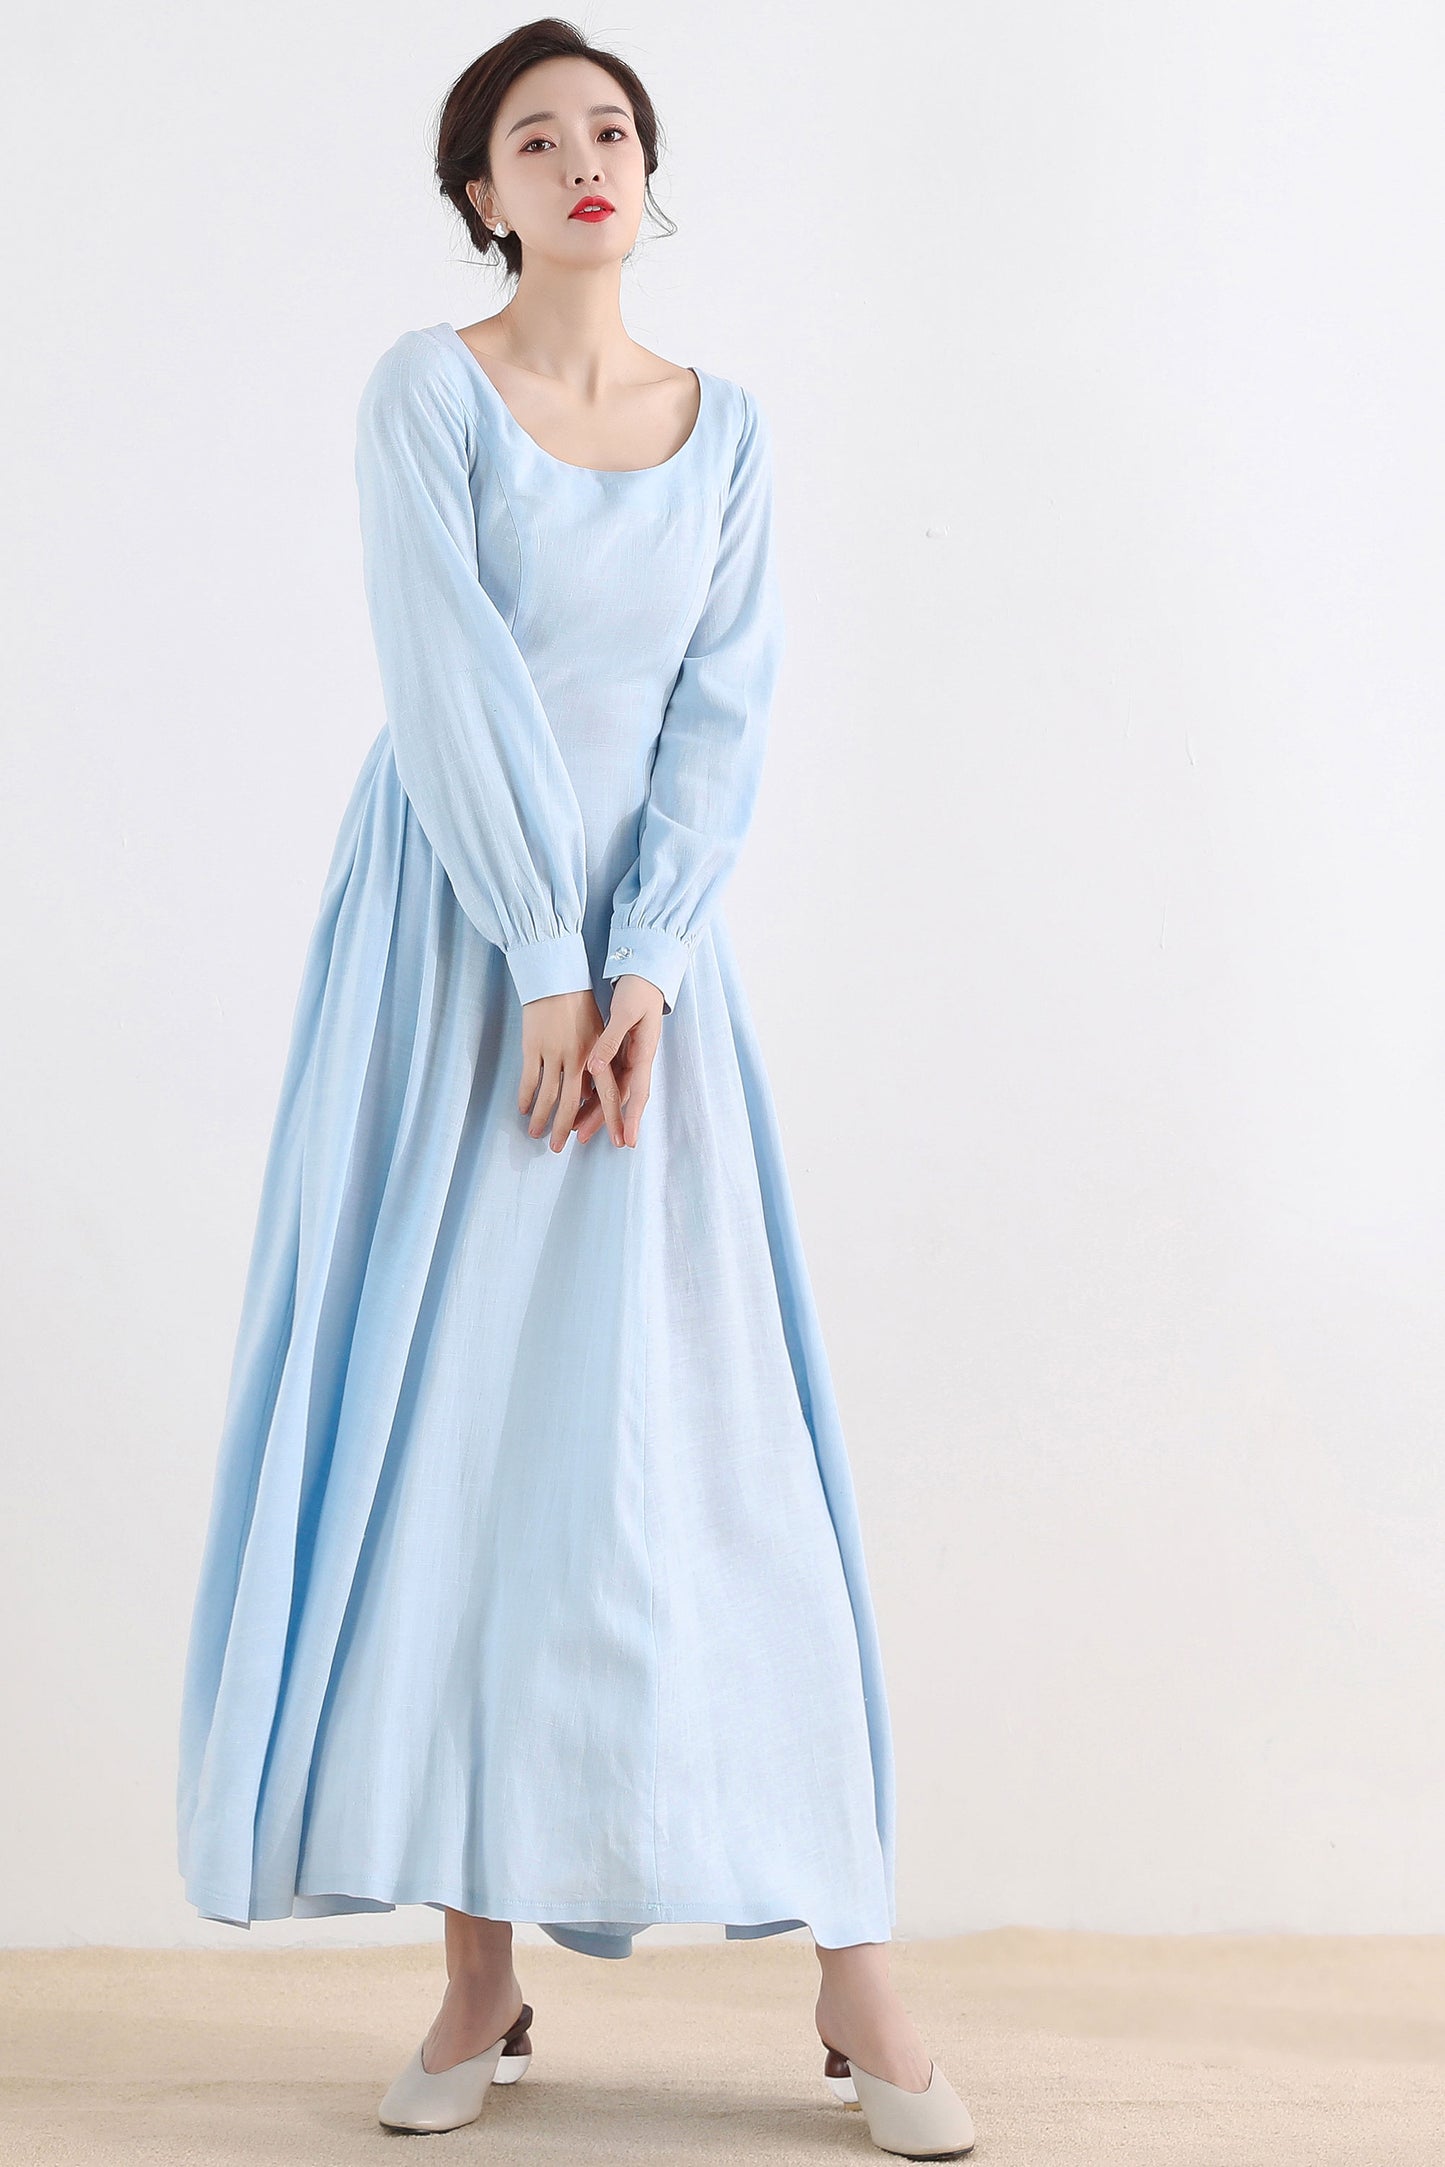 Blue long sleeve bridesmaid dress 2508